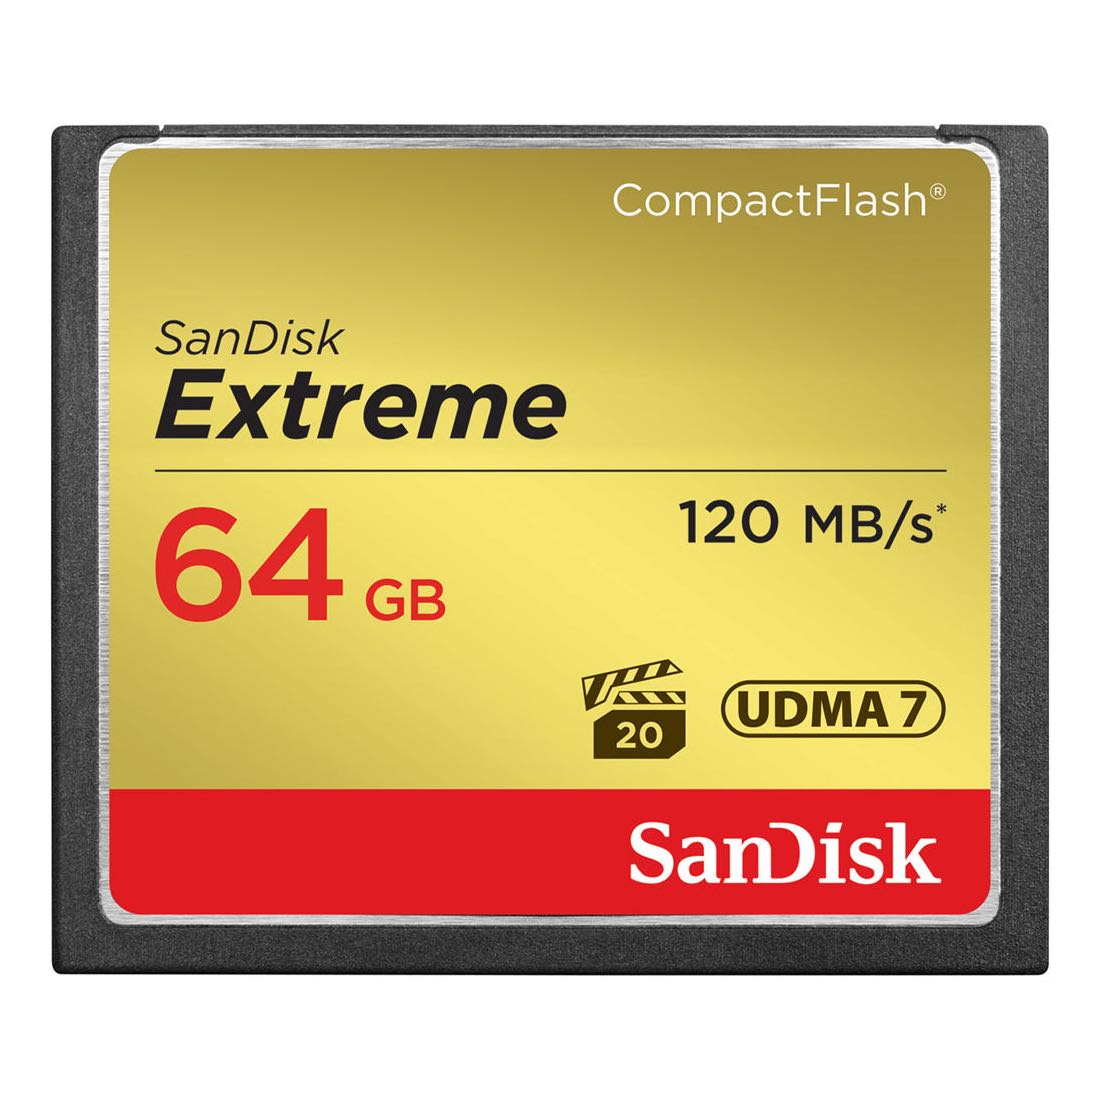 TThumbnail image for SanDisk 64GB Extreme CompactFlash